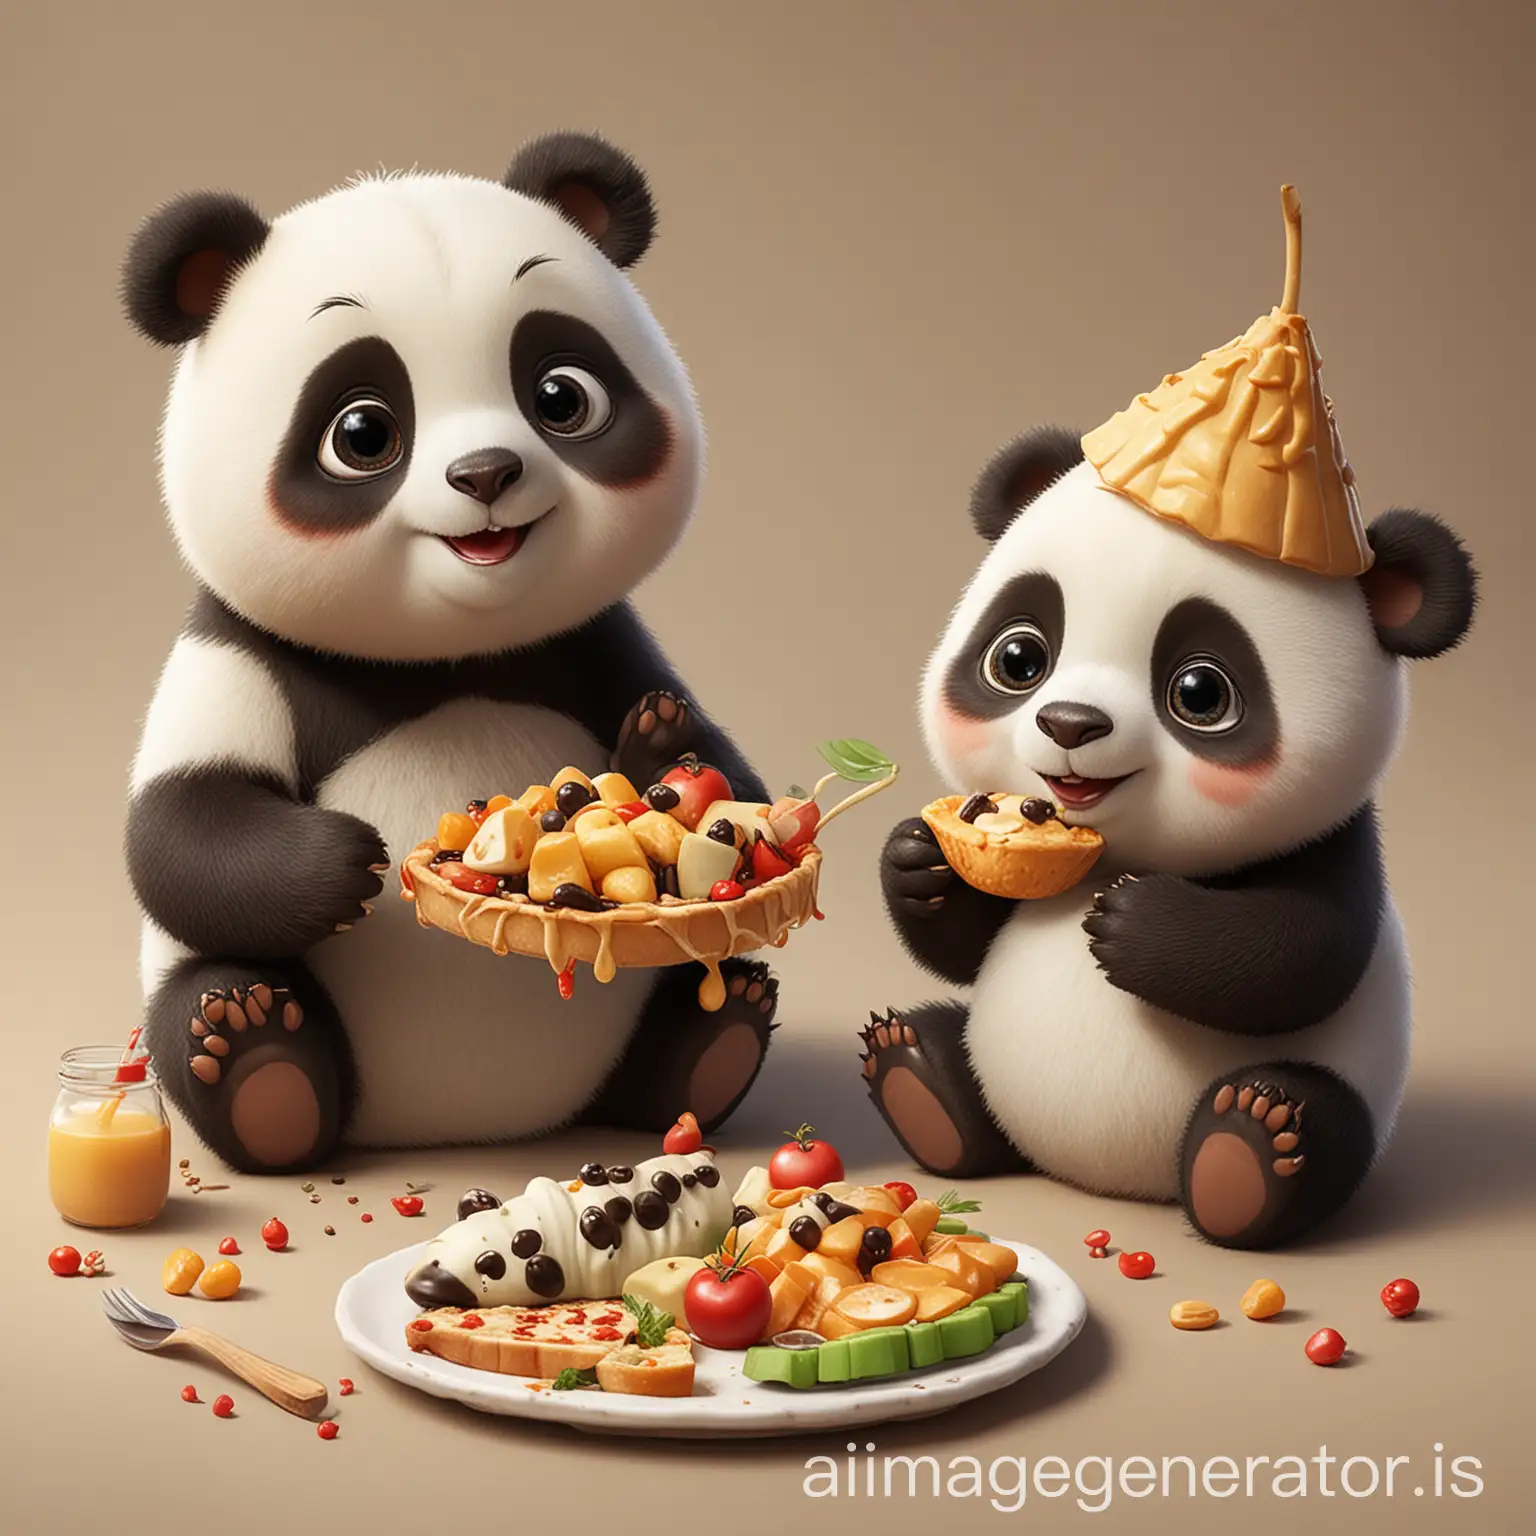 A cute BuBu and DuDu Panda cartoon with food